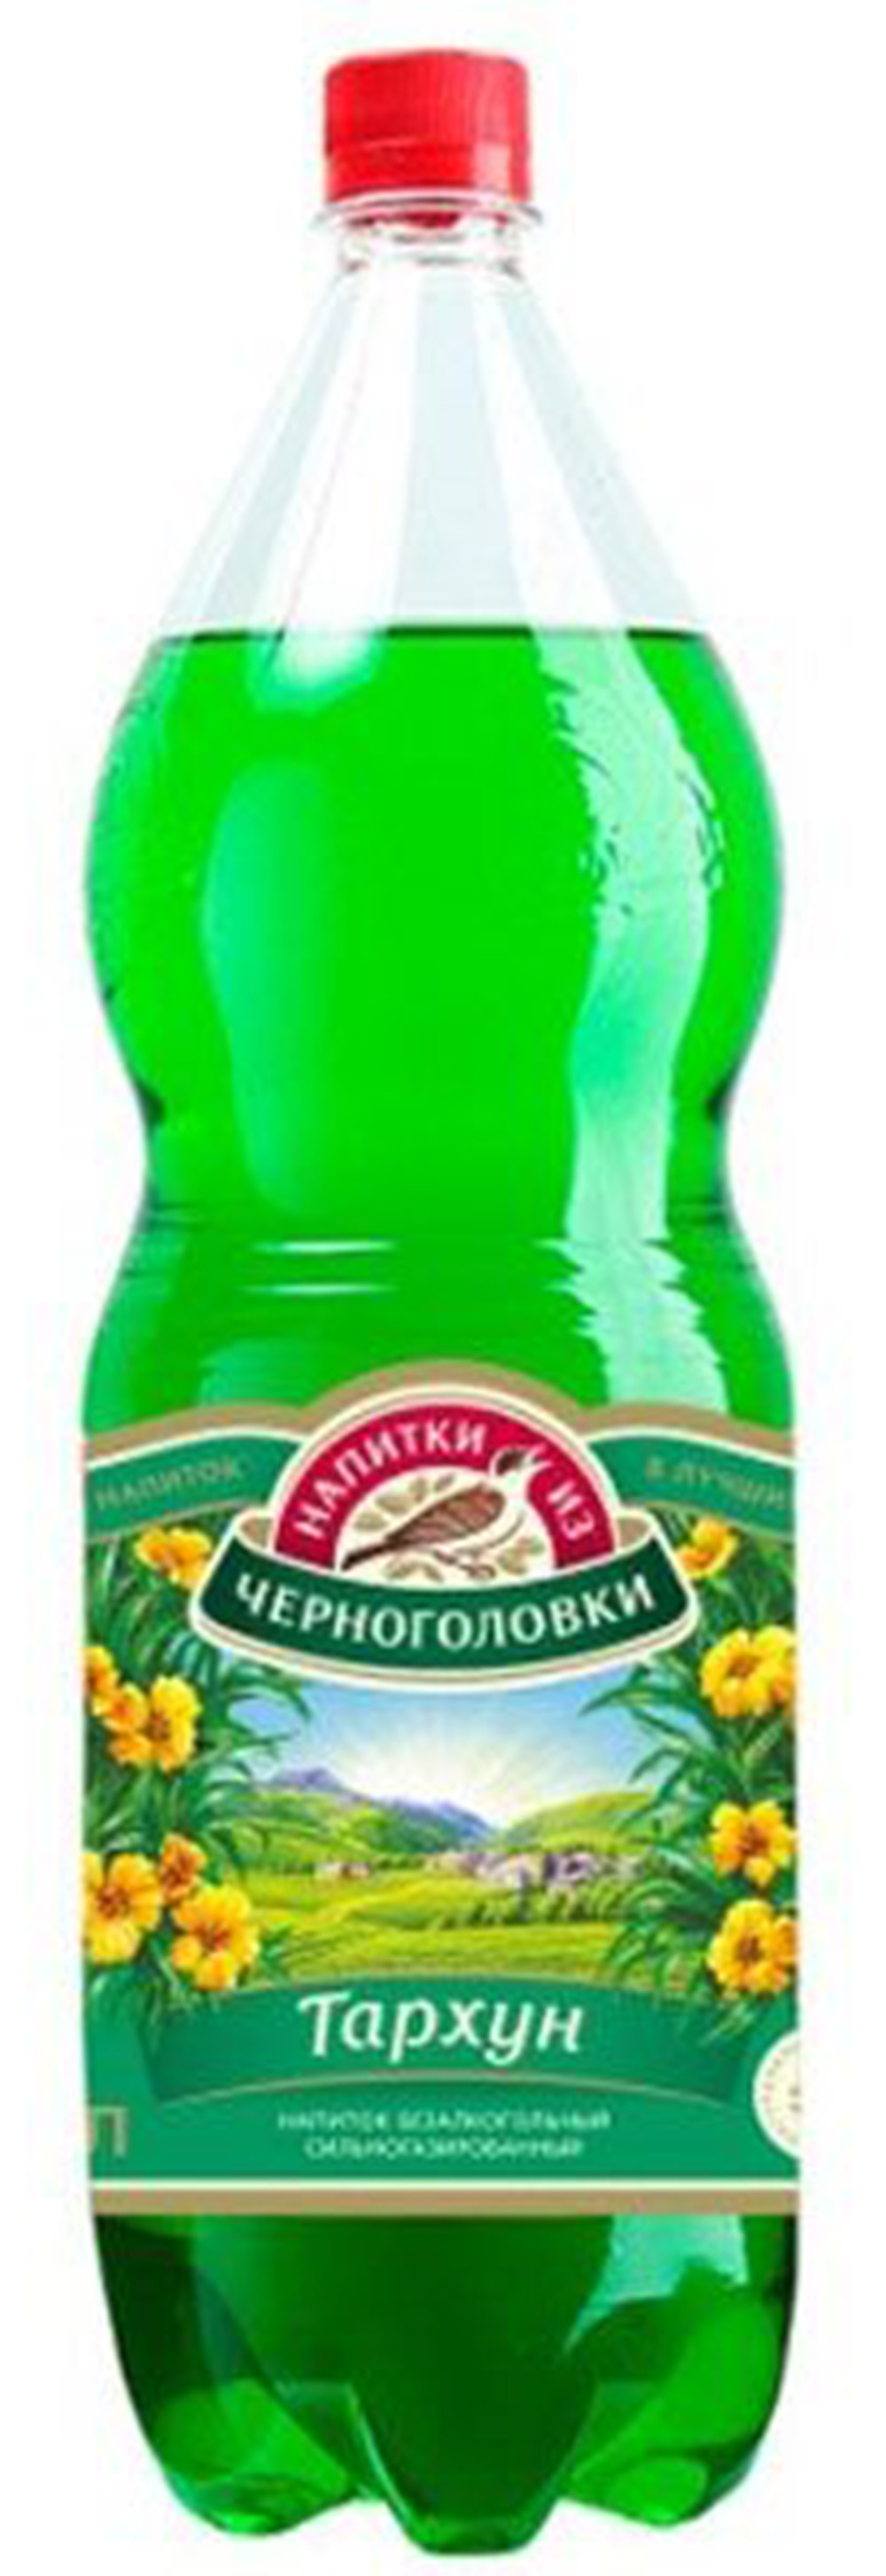 Напиток Черноголовка Тархун газ бут 2.0 л - интернет-магазин Близнецы